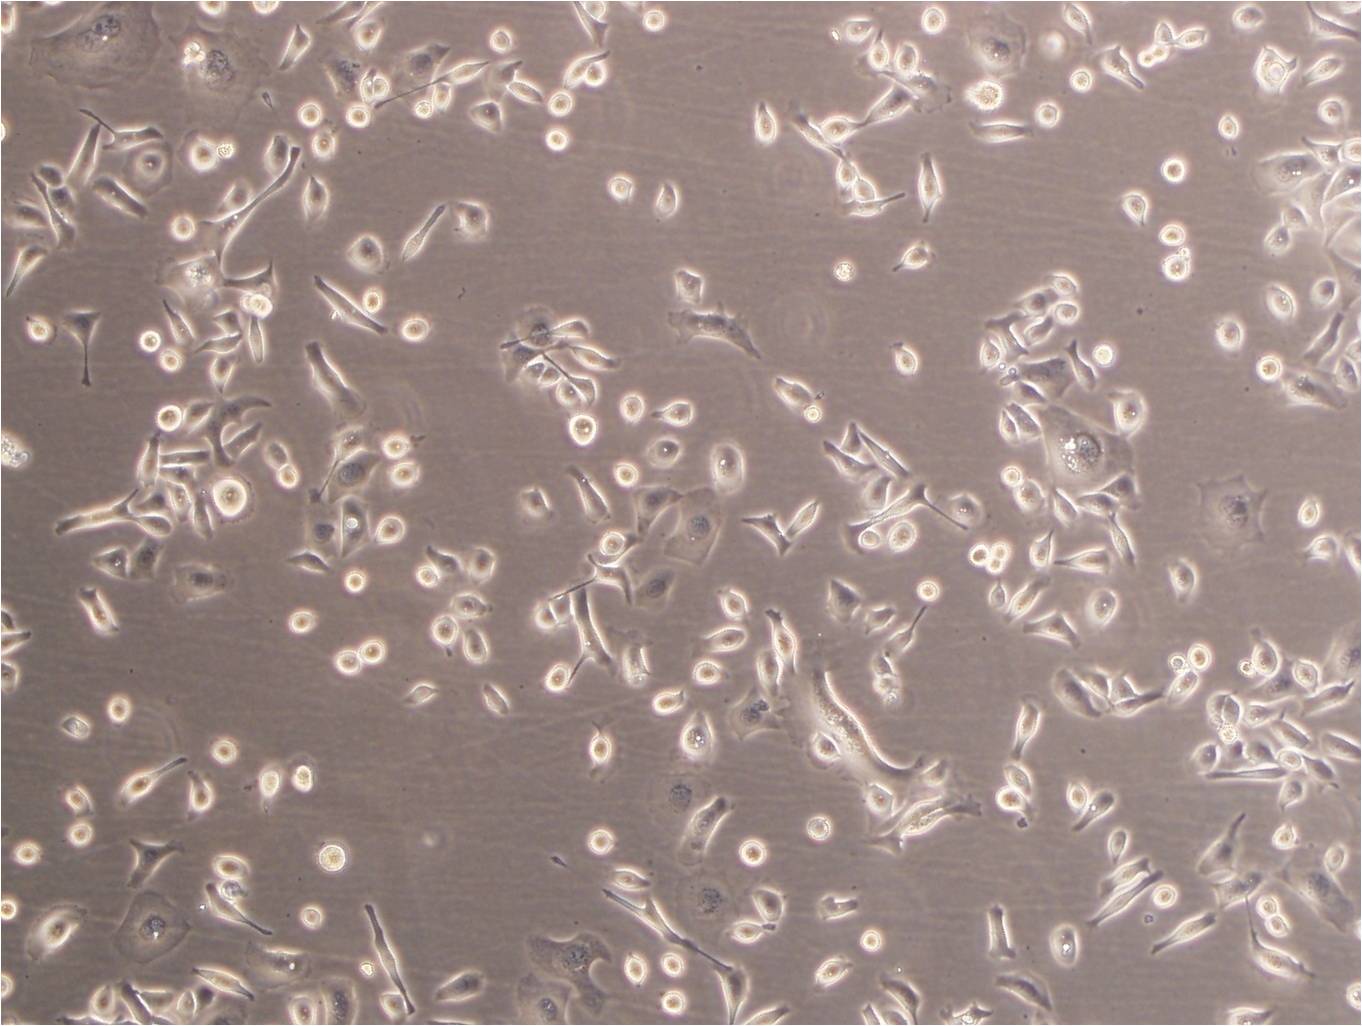 SV-HUC-1 cell line人膀胱上皮永生化细胞系,SV-HUC-1 cell line